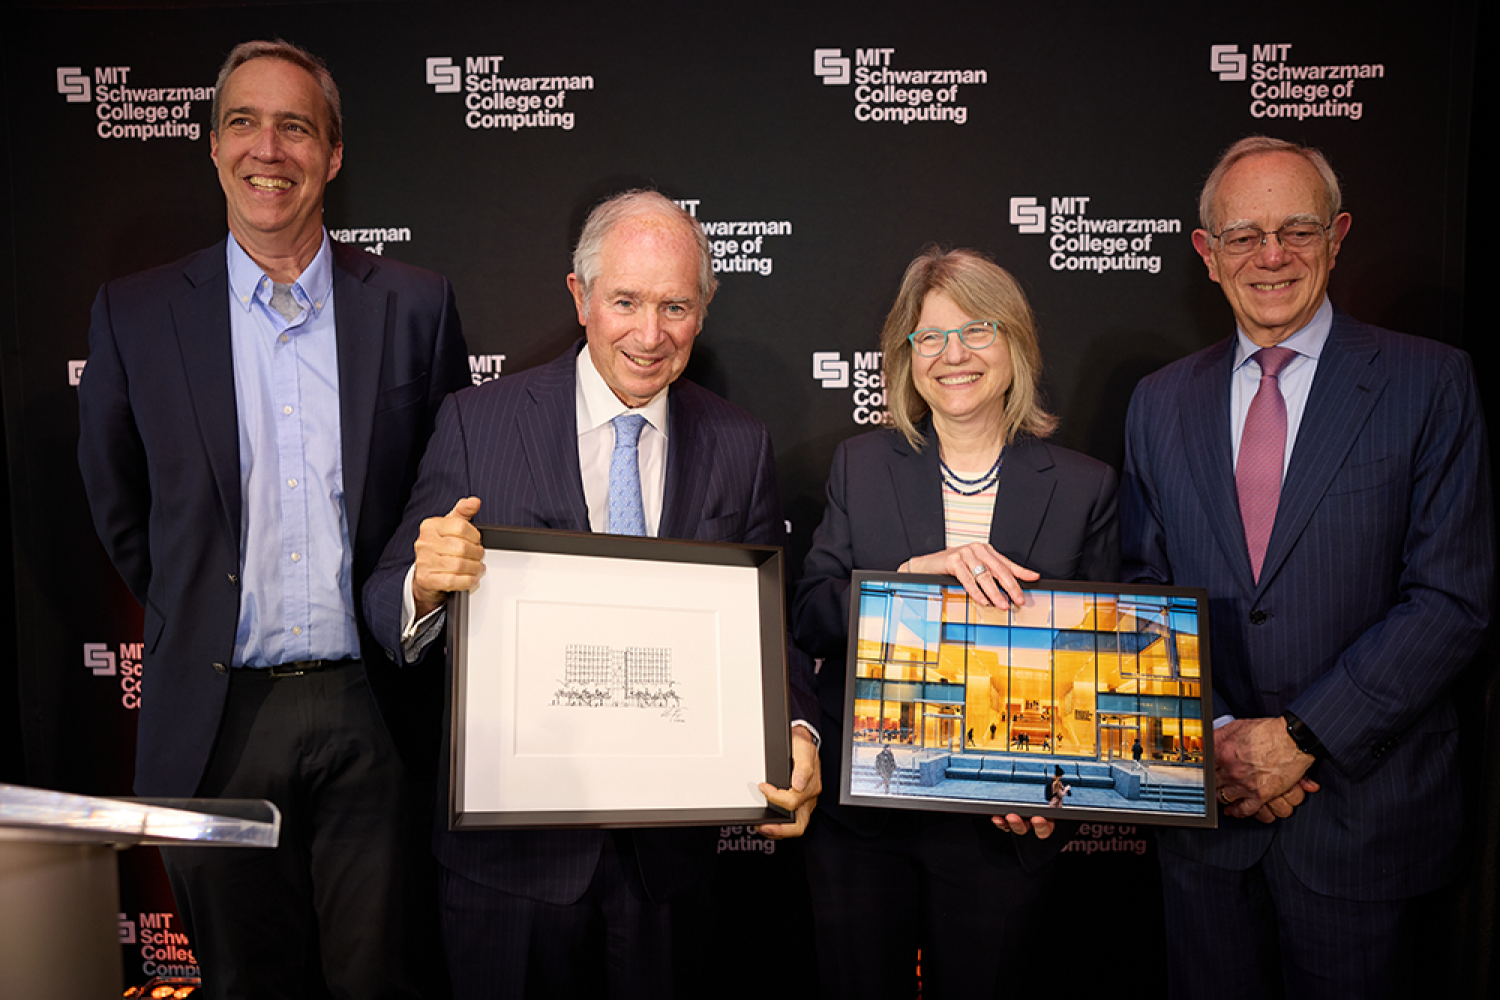 Marking a milestone: Dedication ceremony celebrates the new MIT Schwarzman College of Computing building